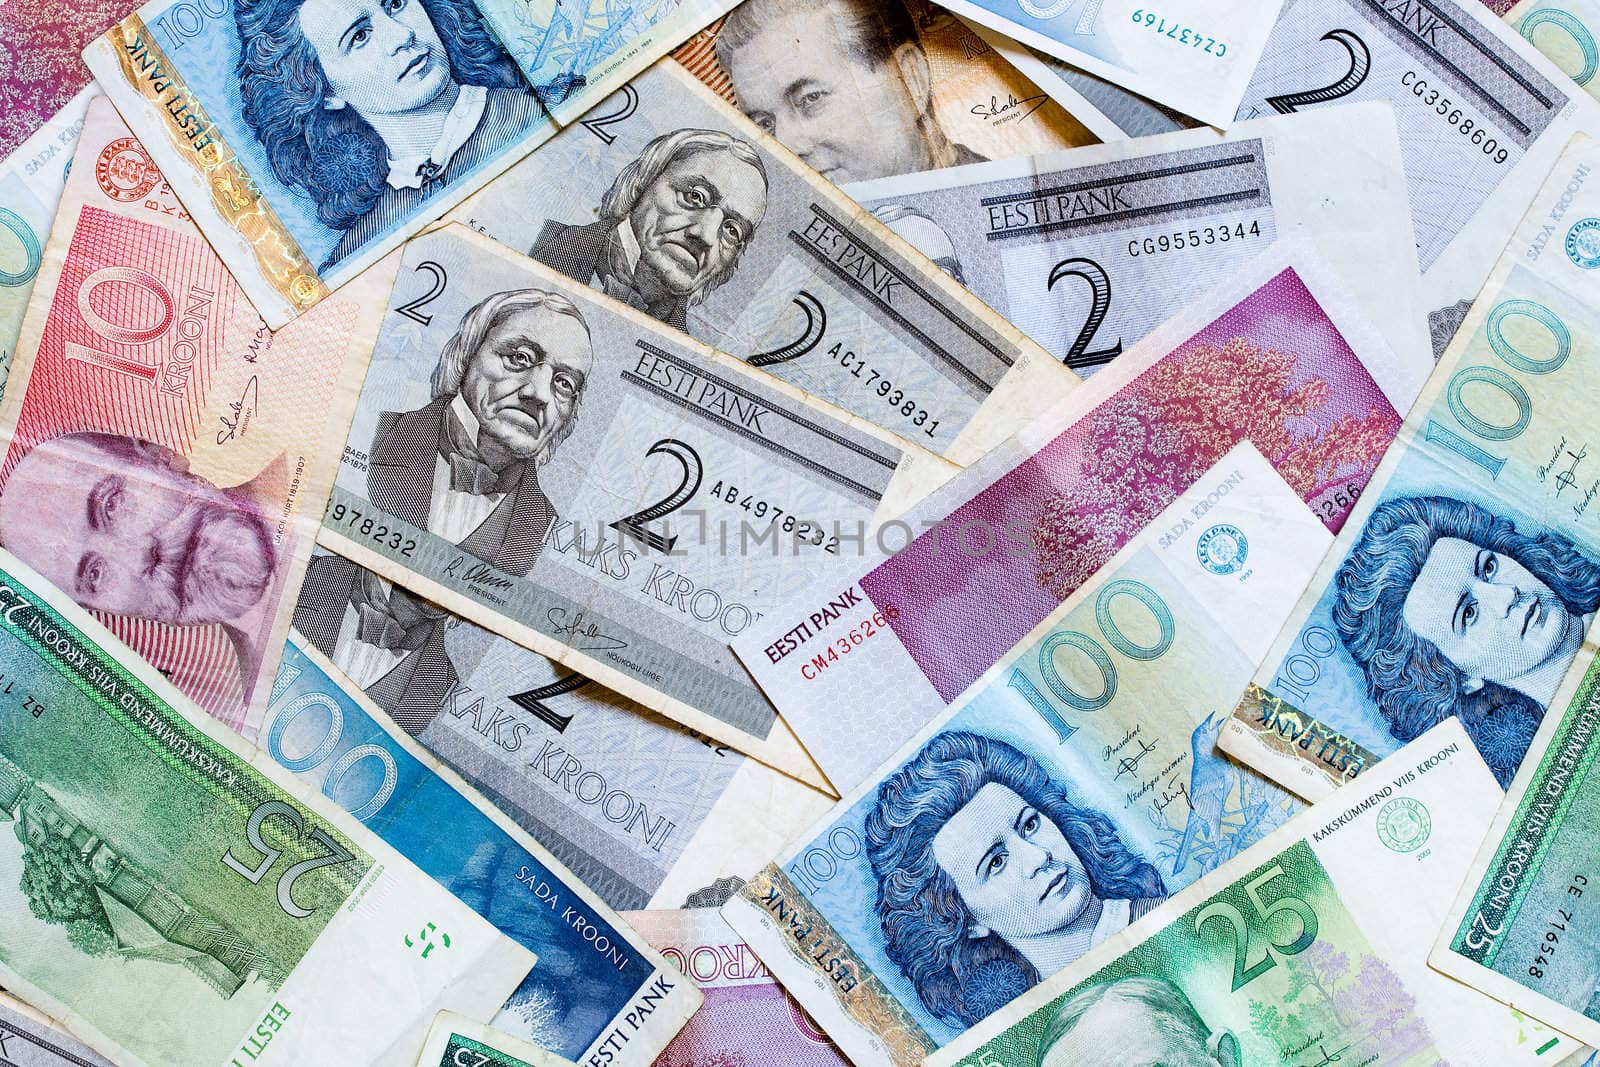 Estonian money by ints